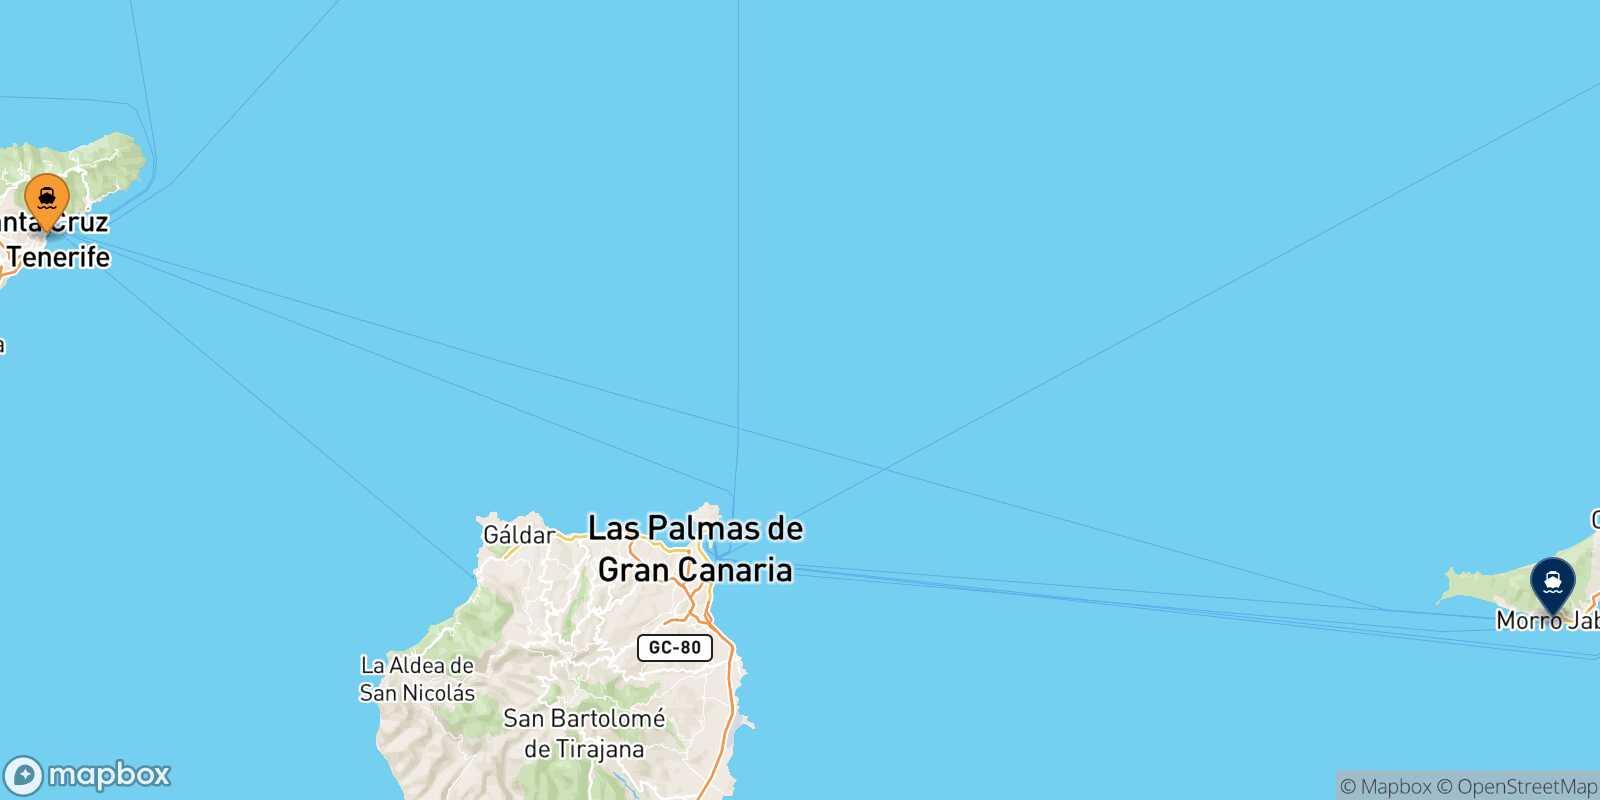 Santa Cruz De Tenerife Morro Jable (Fuerteventura) route map